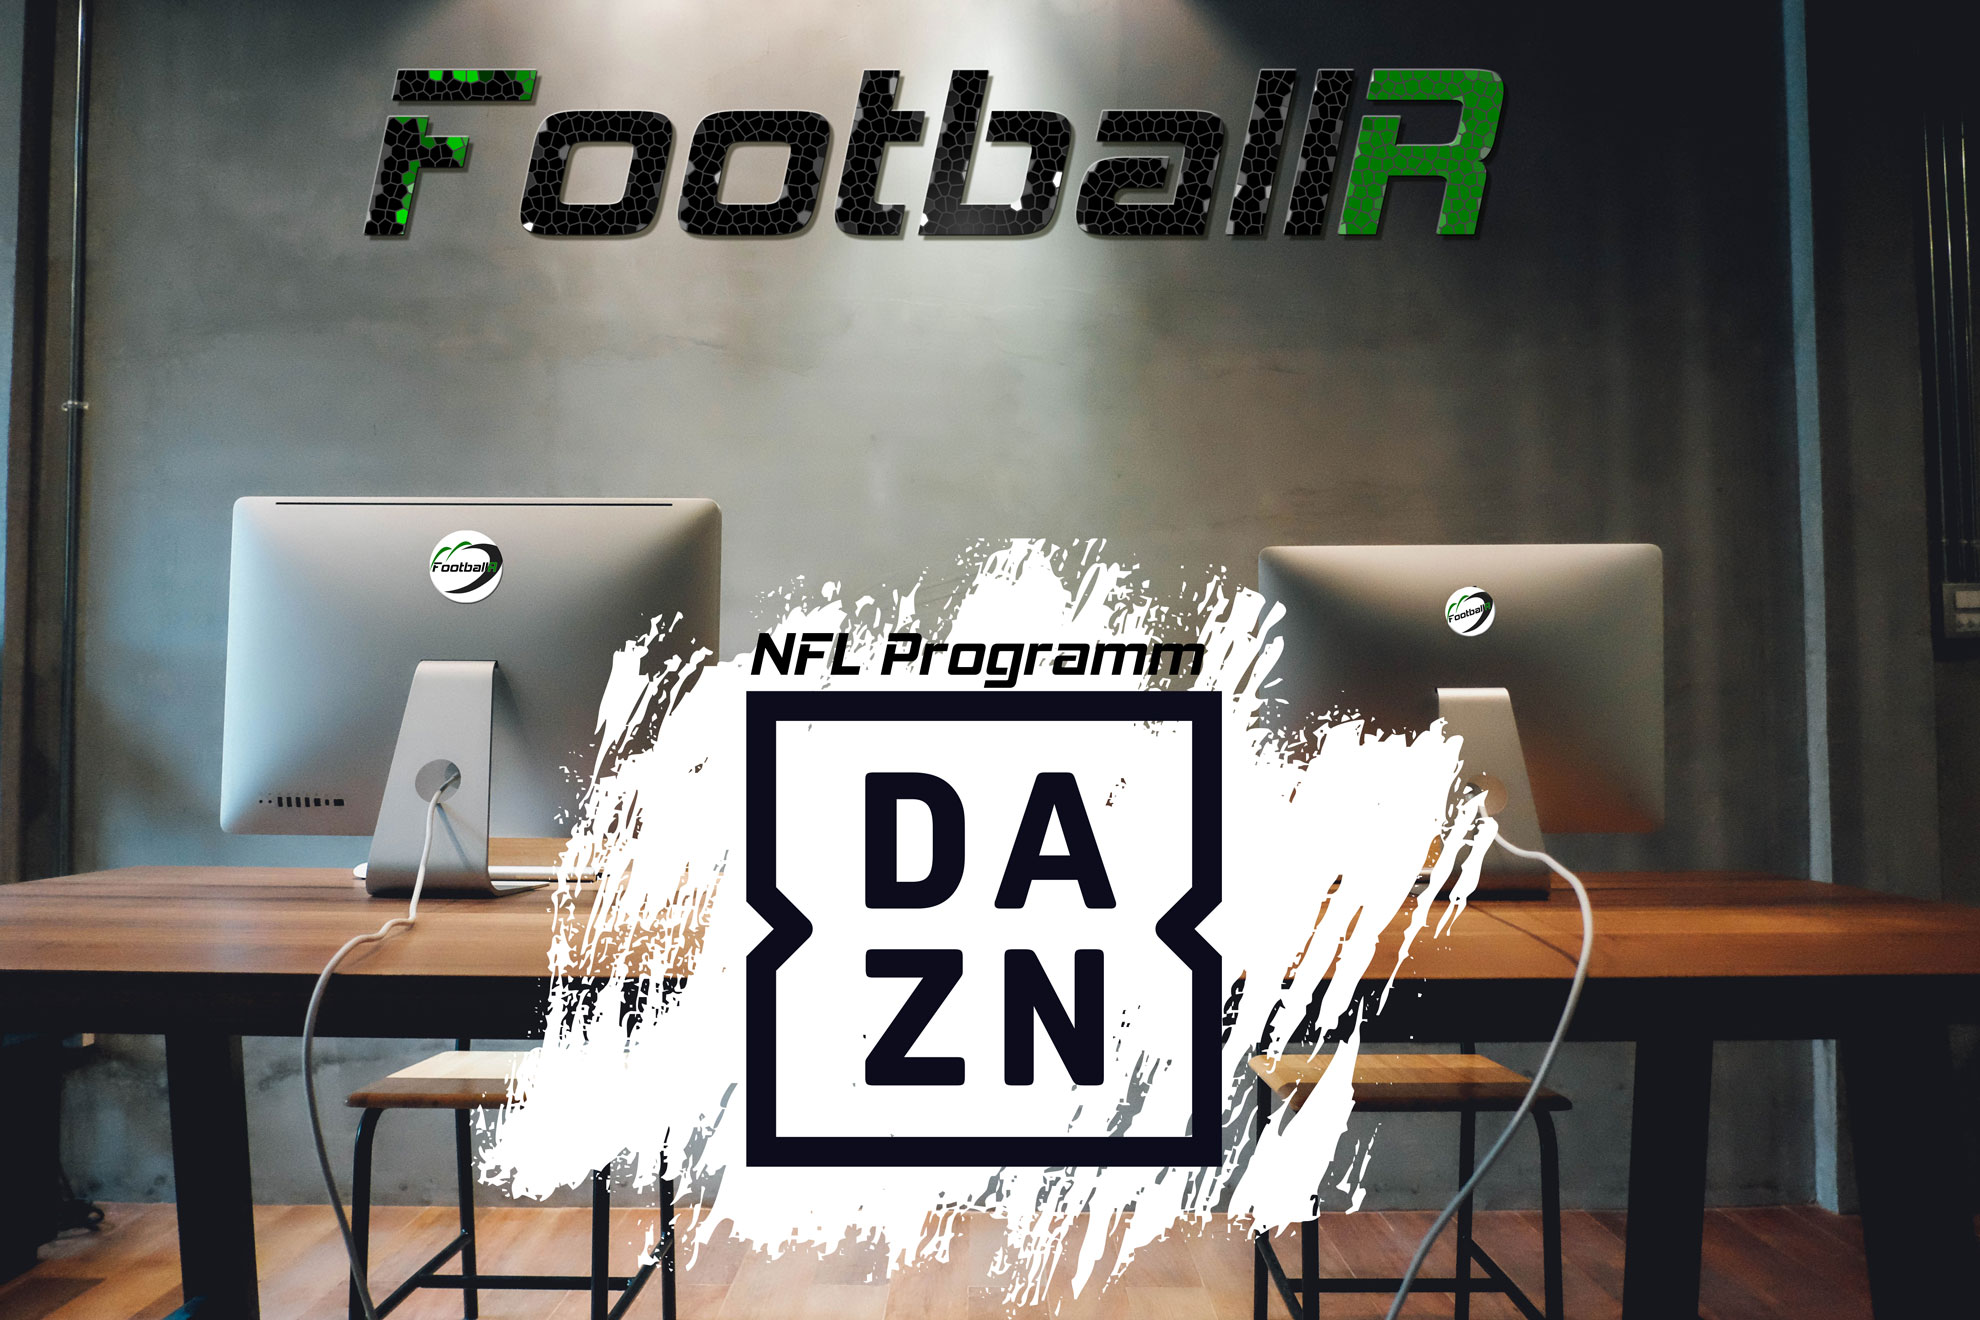 DAZN Programm NFL - DAZN_TV_Plan_NFL DAZN NFL Woche 11